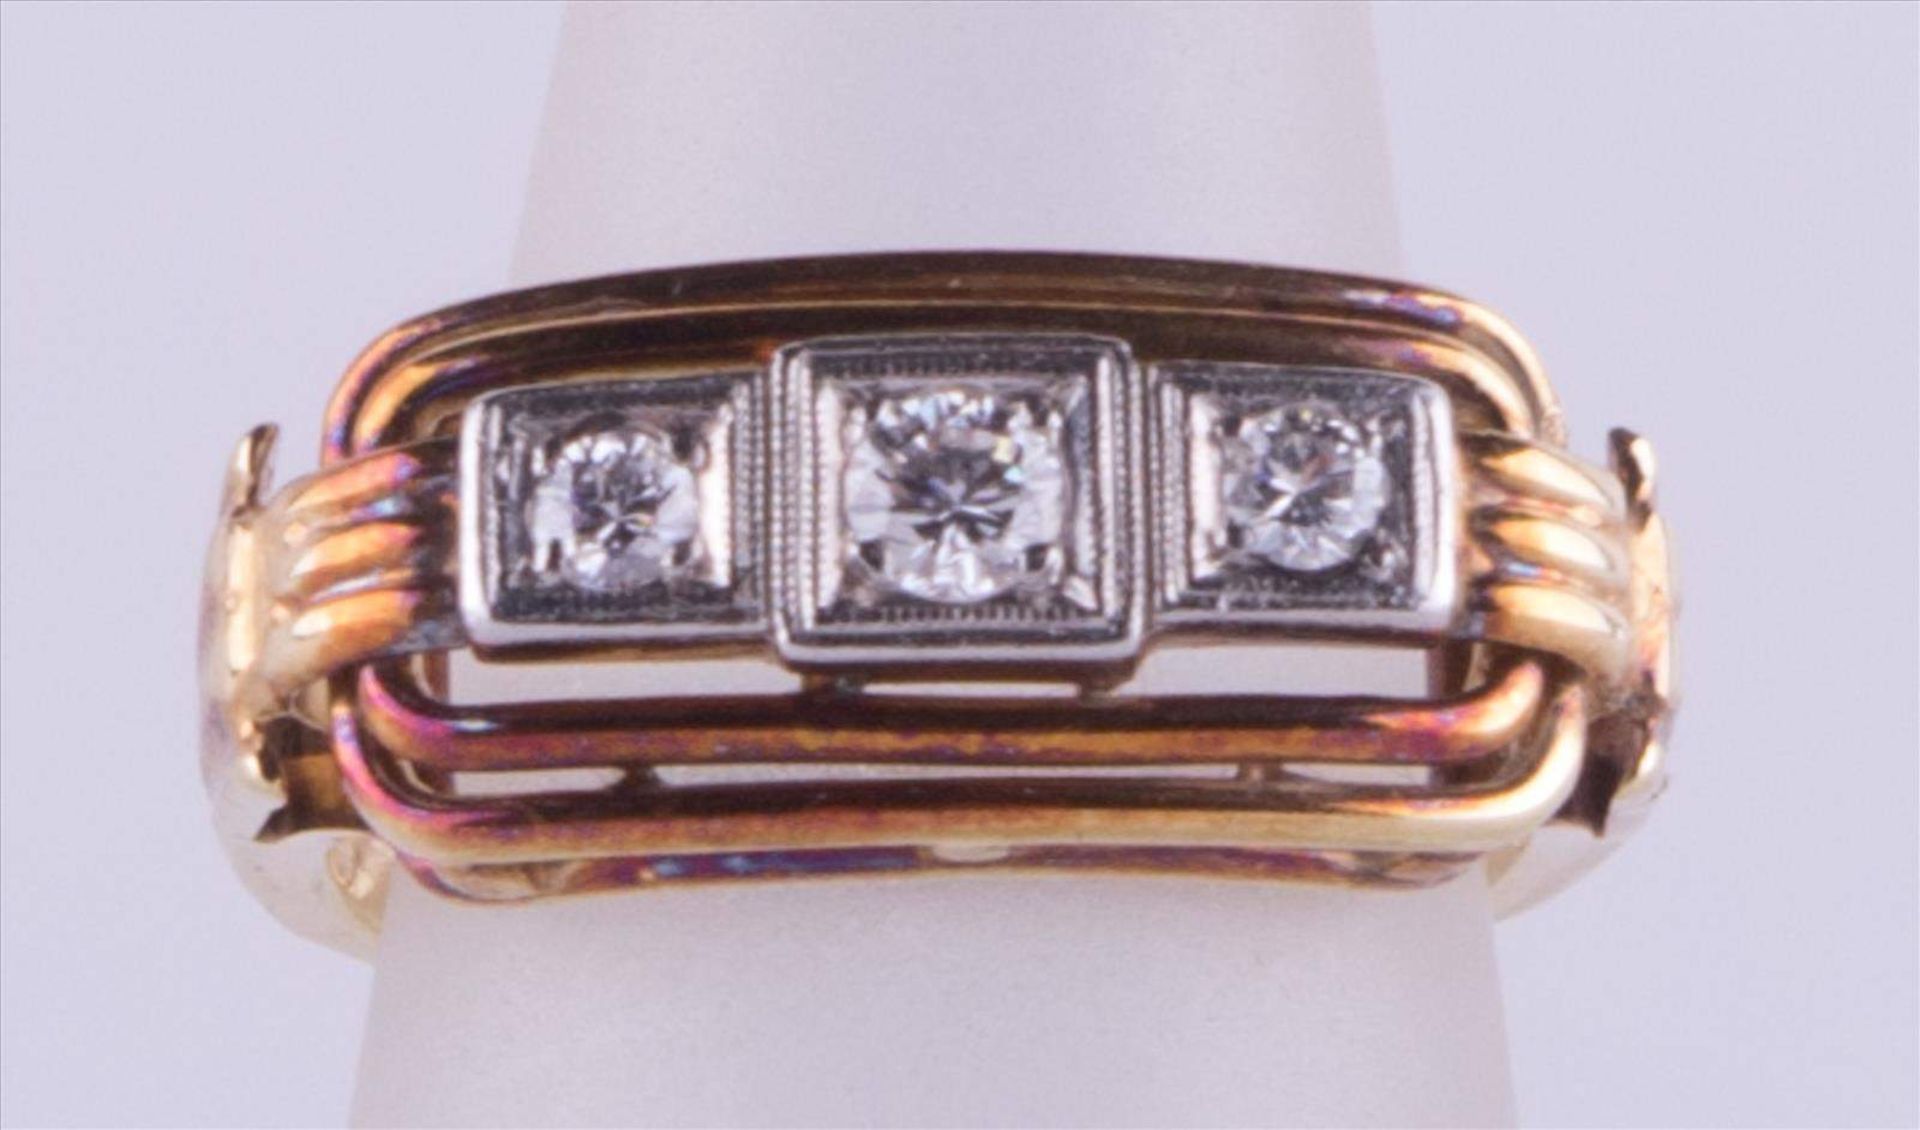 Damen Diamant Ring / Women's diamond ring Ring, 585/000 GG geprüft, Diamanten ca. 0,24 ct, Gewicht